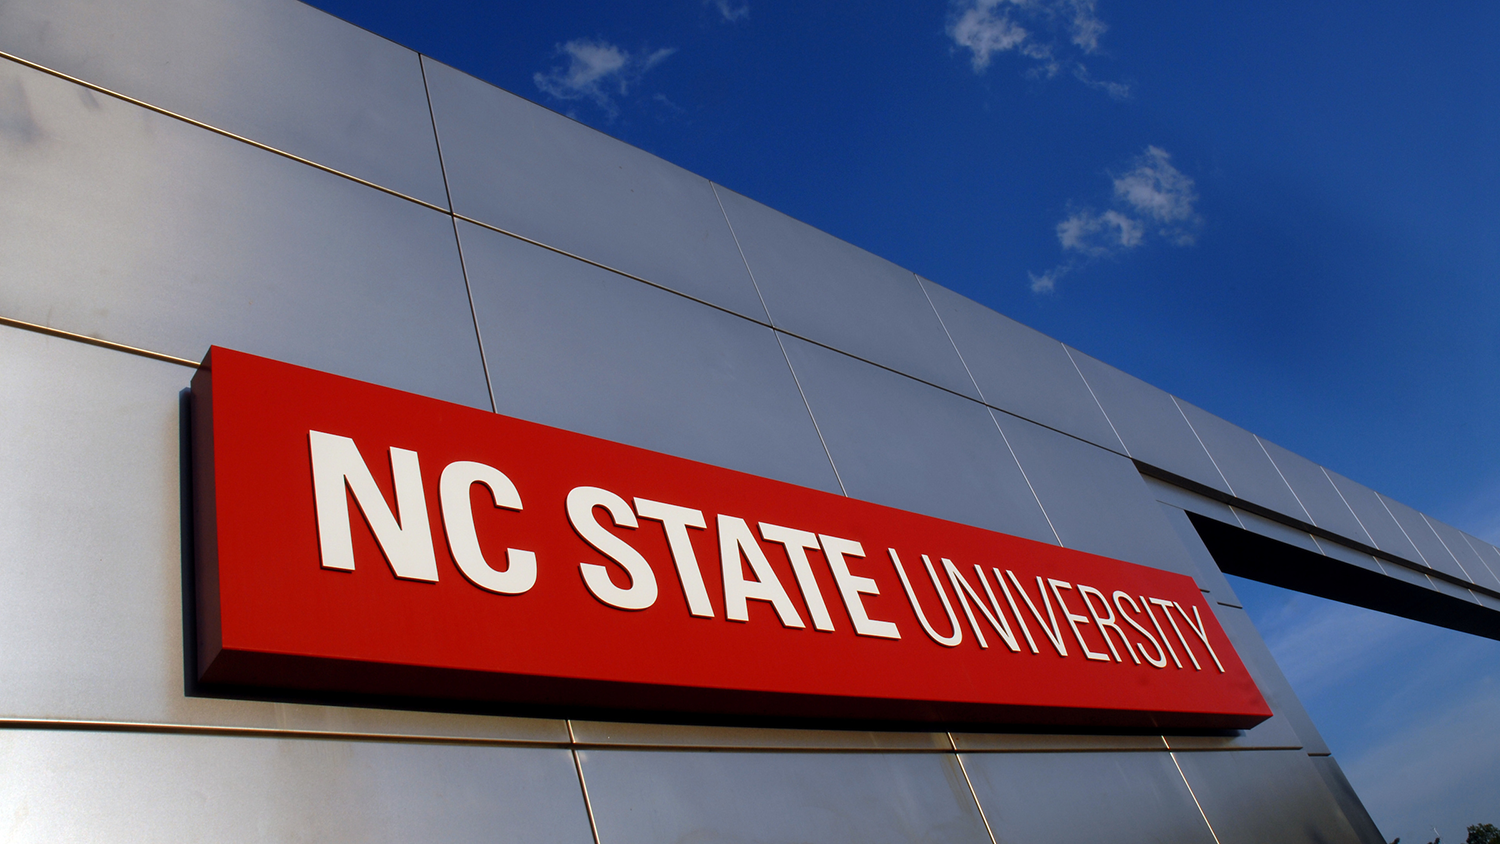 NC State university sign